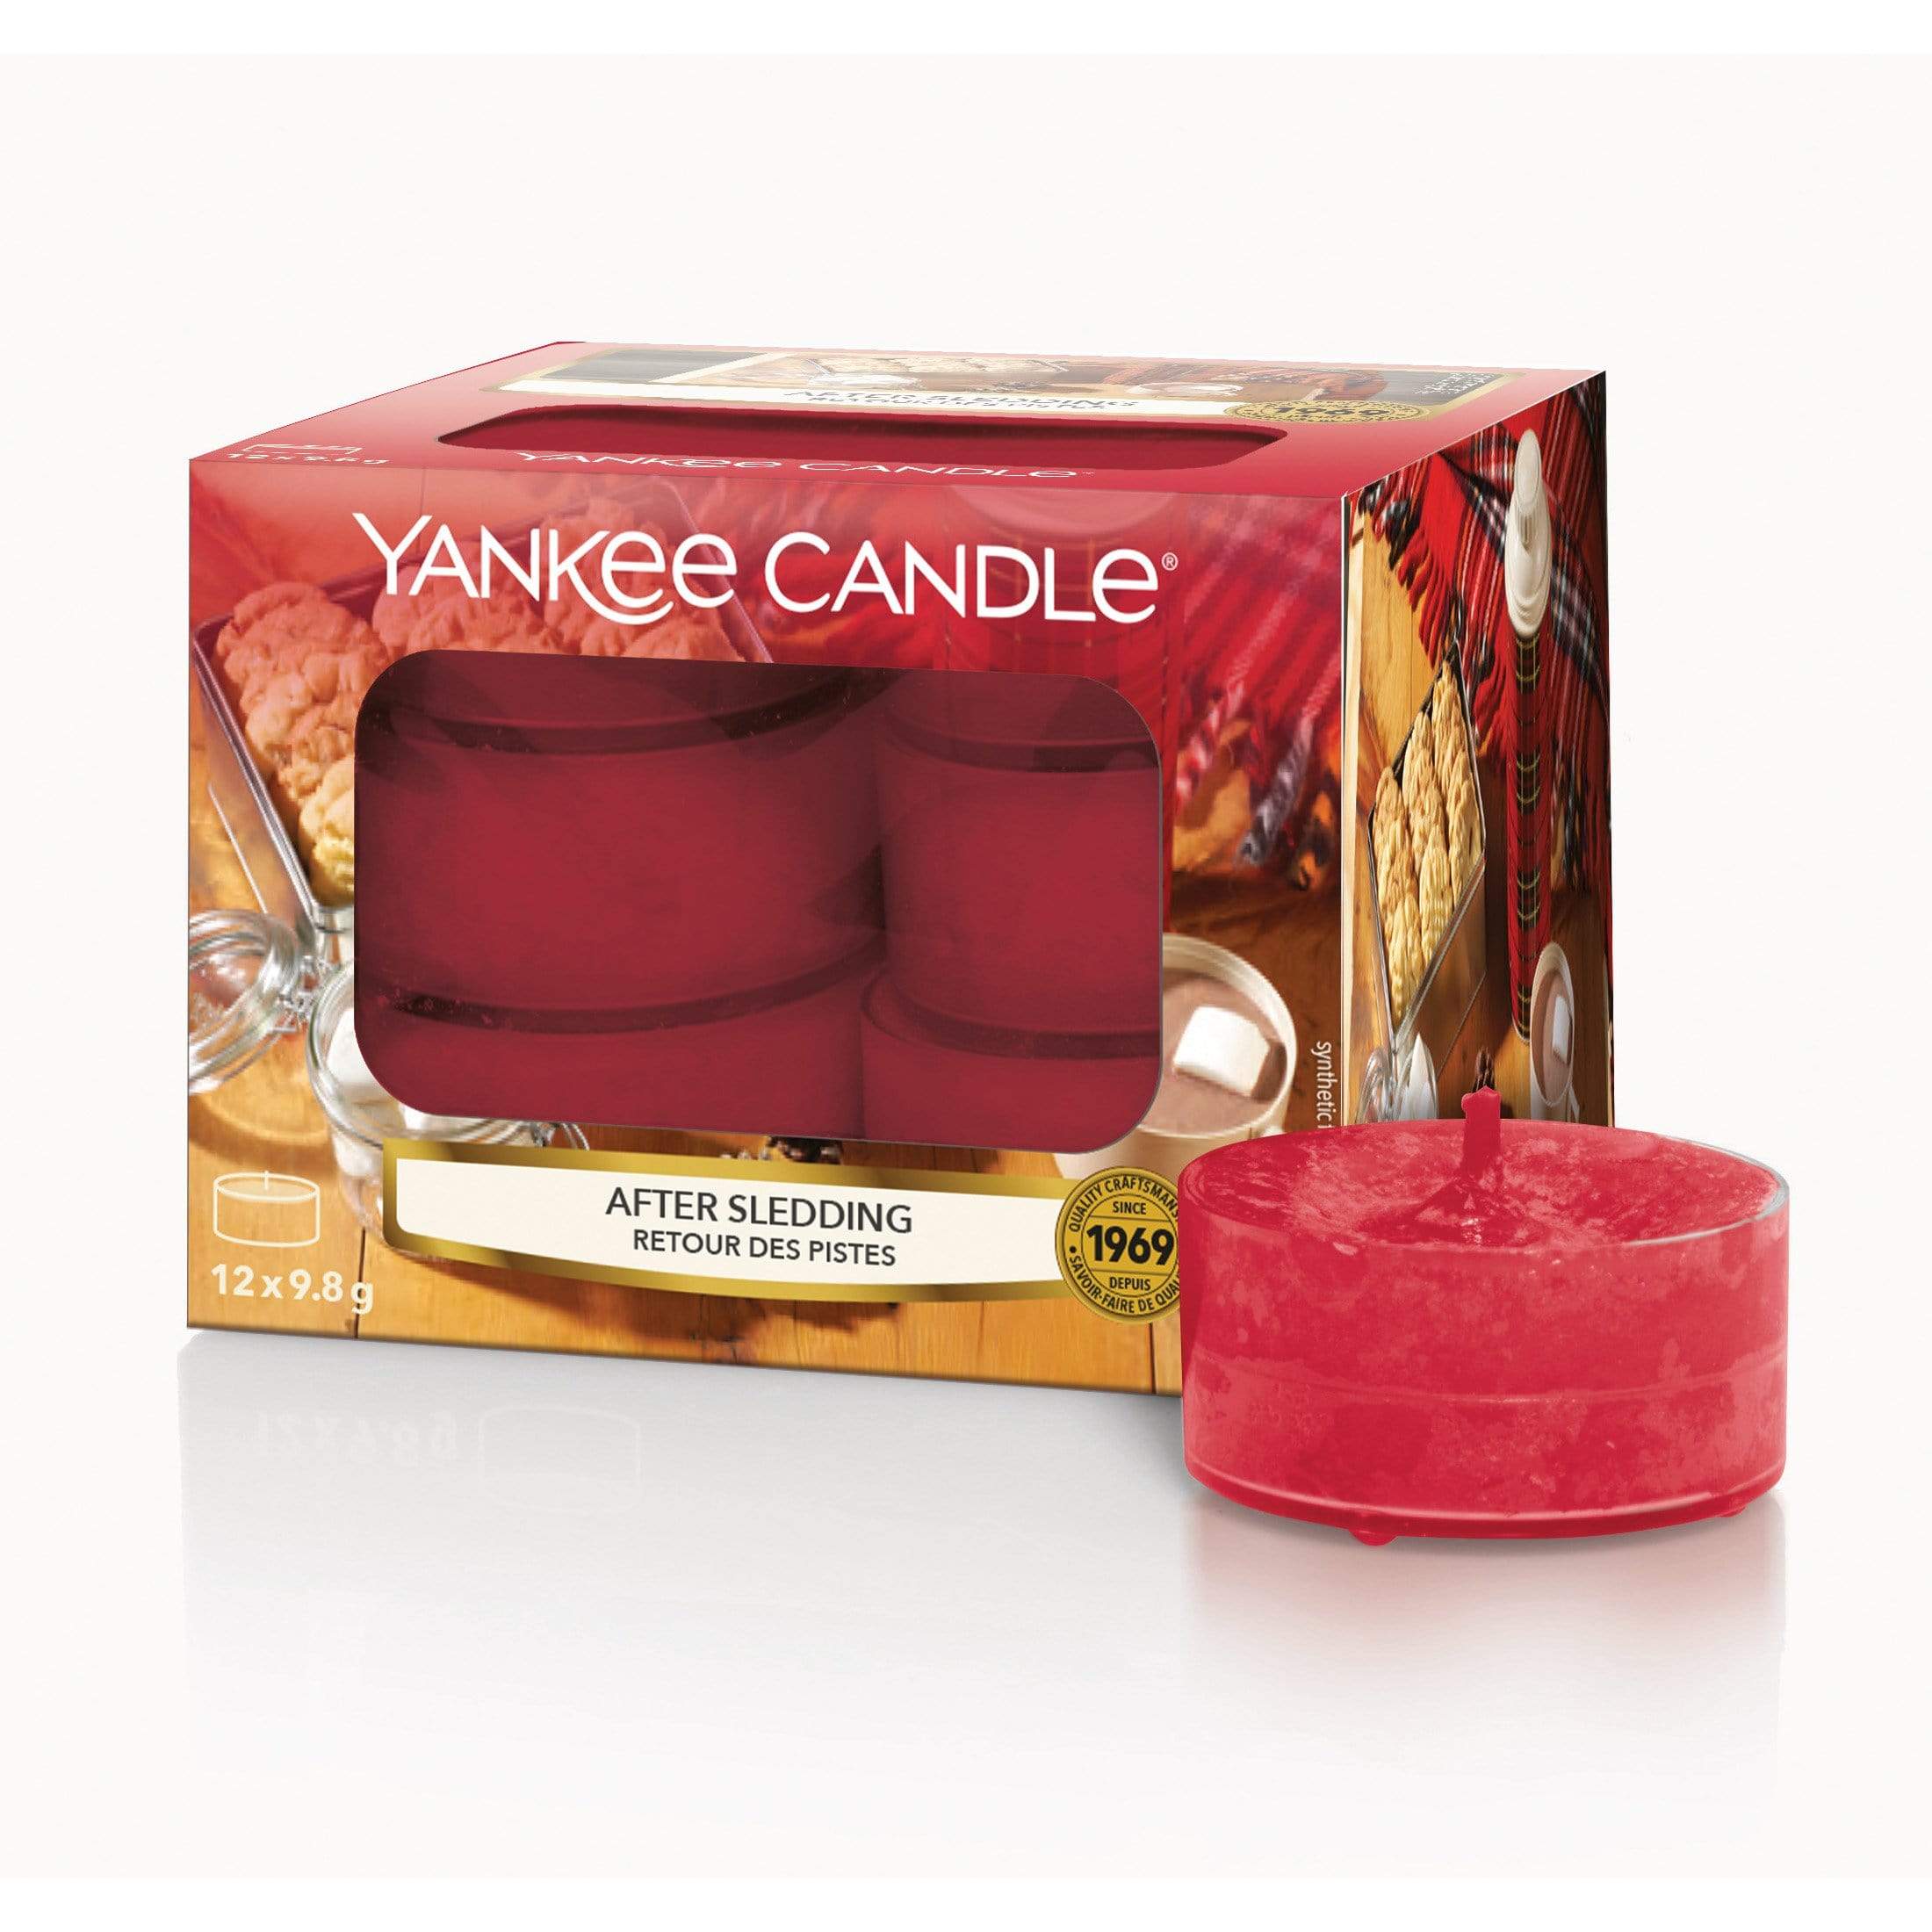 Yankee Candle Yankee Candle Yankee Candle Pack of 12 Tea Light Candles - After Sledding